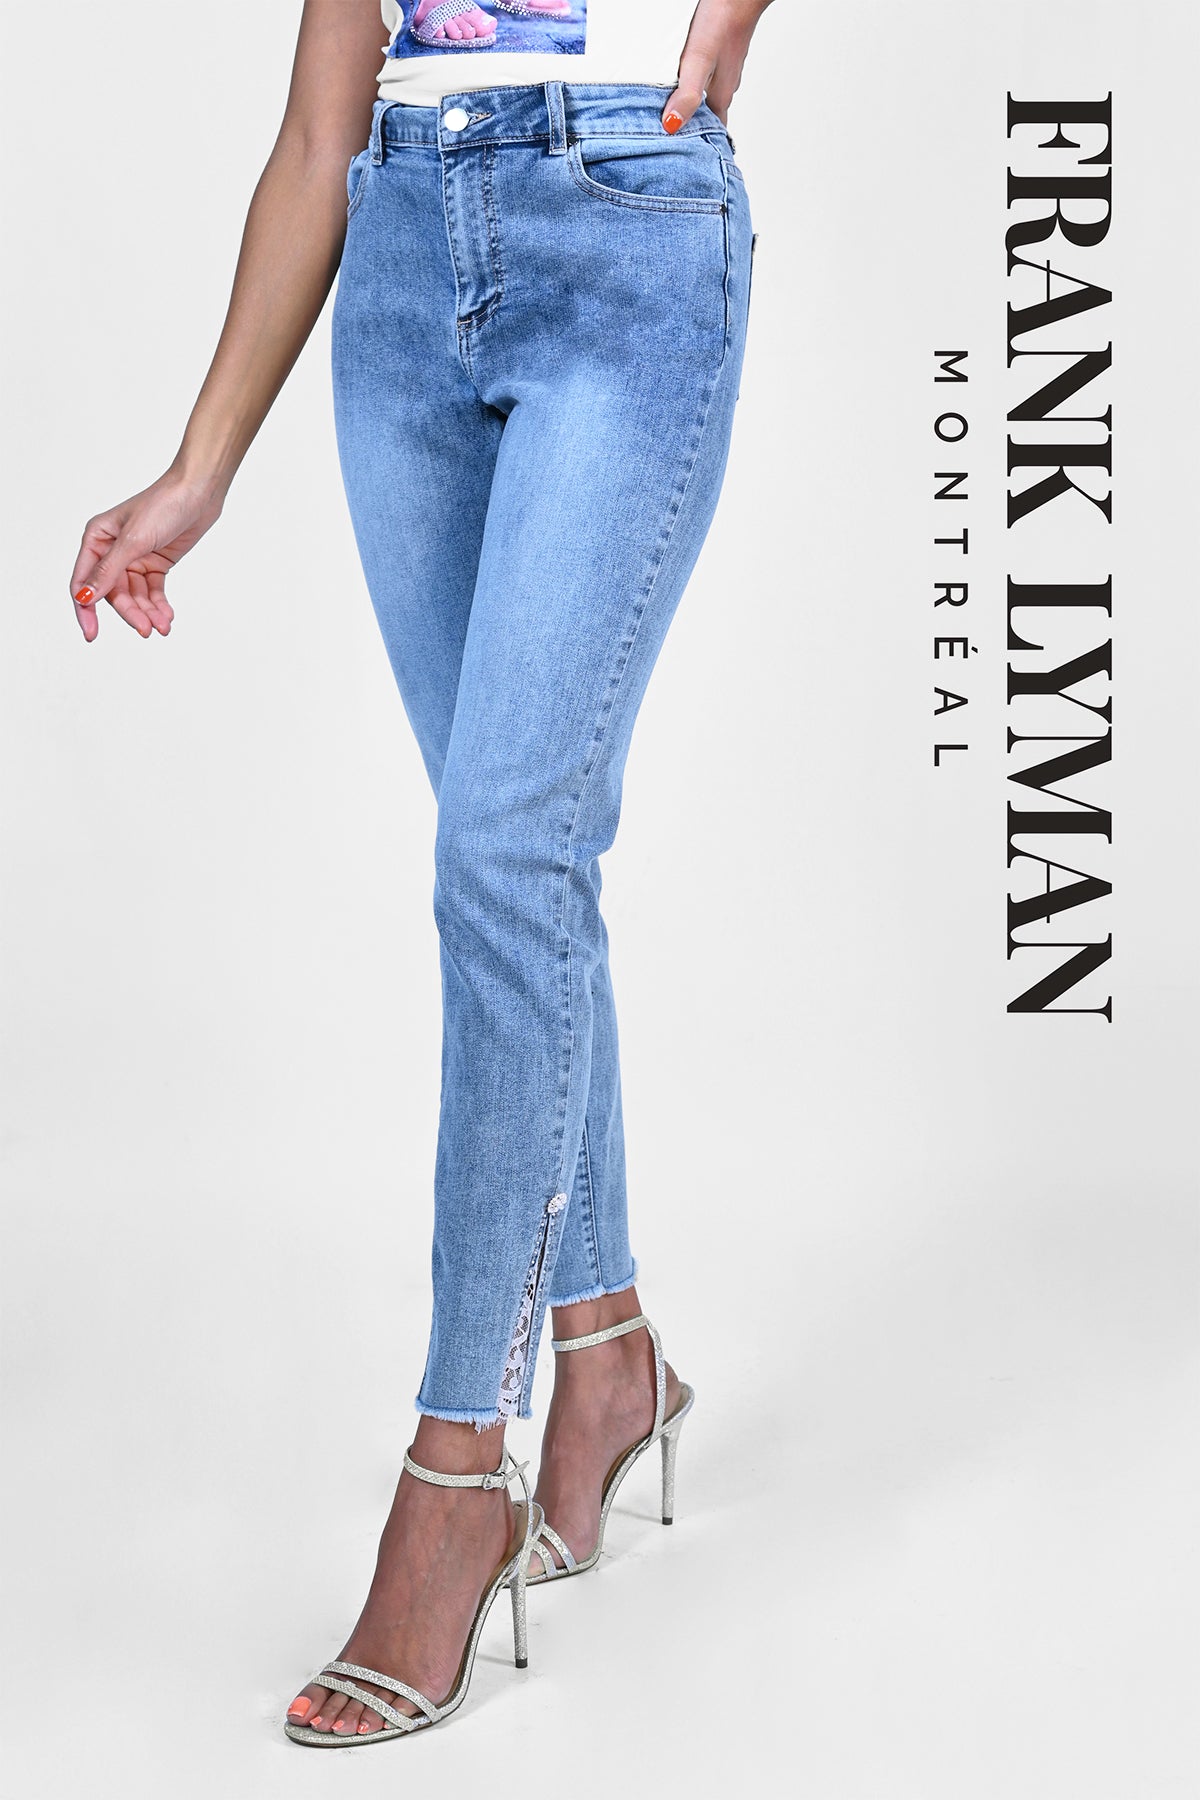 Frank Lyman Montreal Jeans-Frank Lyman Montreal Blue Jeans-Buy Frank Lyman Montreal Jeans Online-Frank Lyman Montreal Online Jean Shop